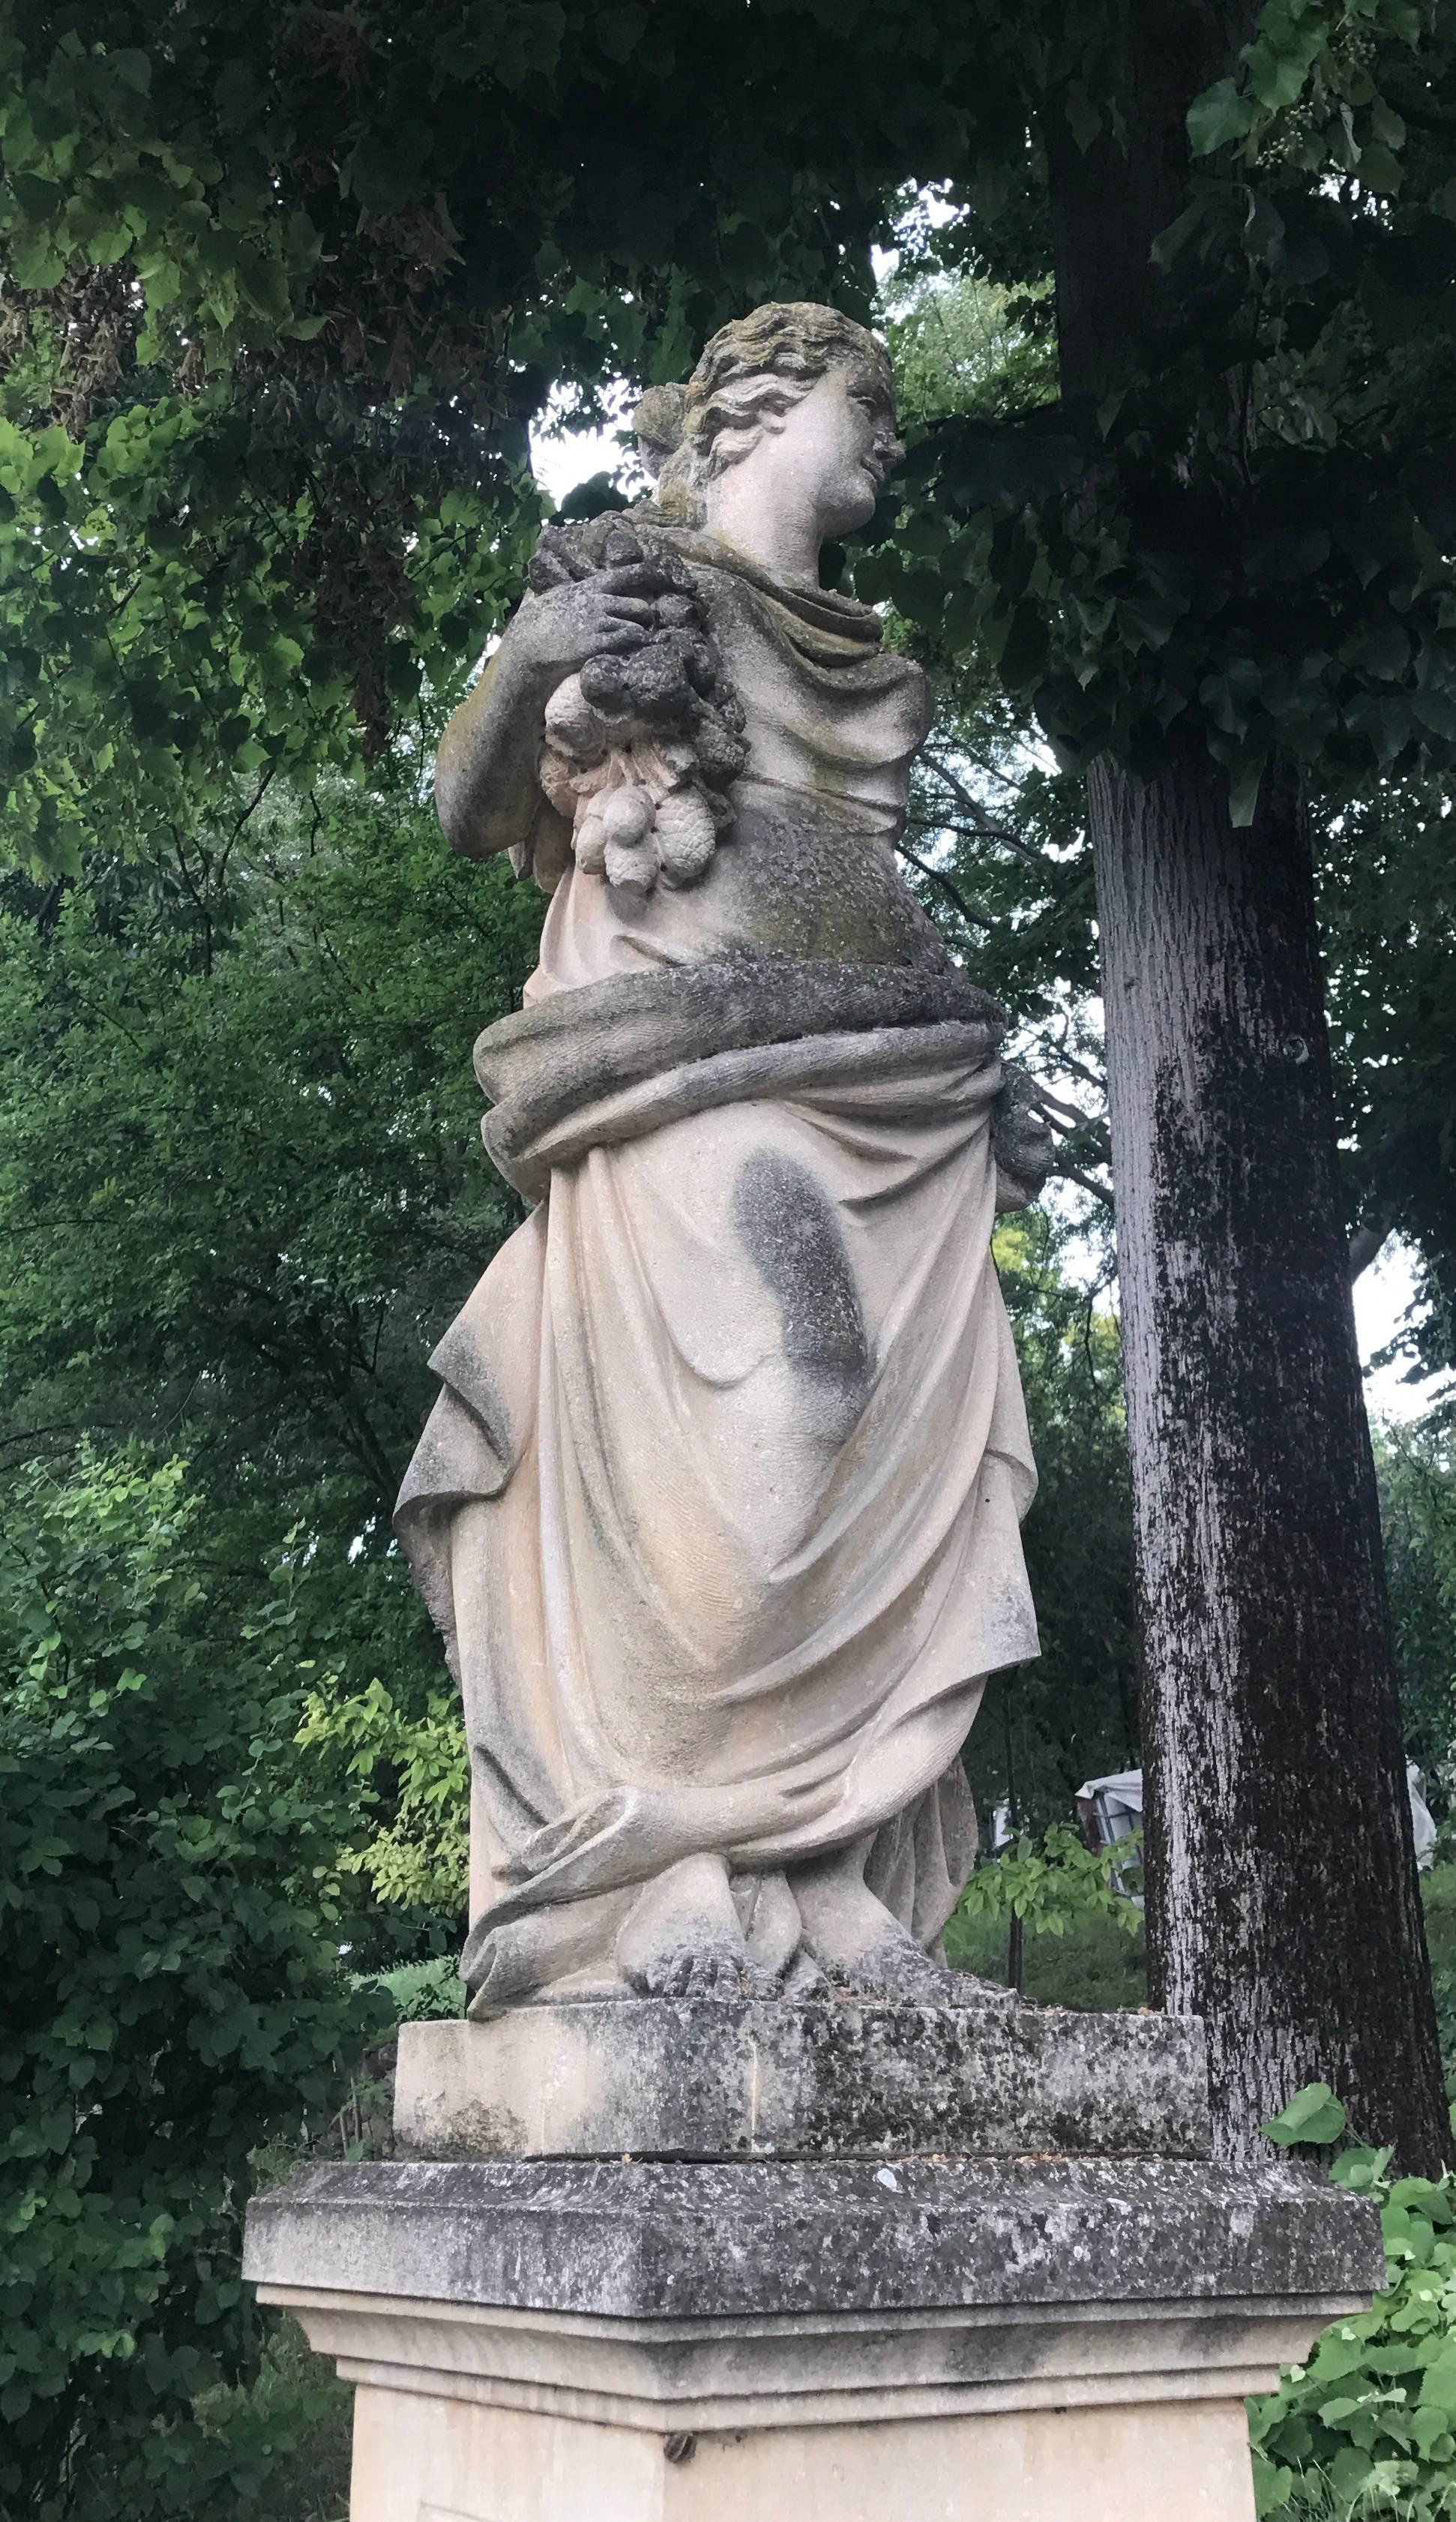  Italian Stone Garden Statues Representing the Four Seasons 1